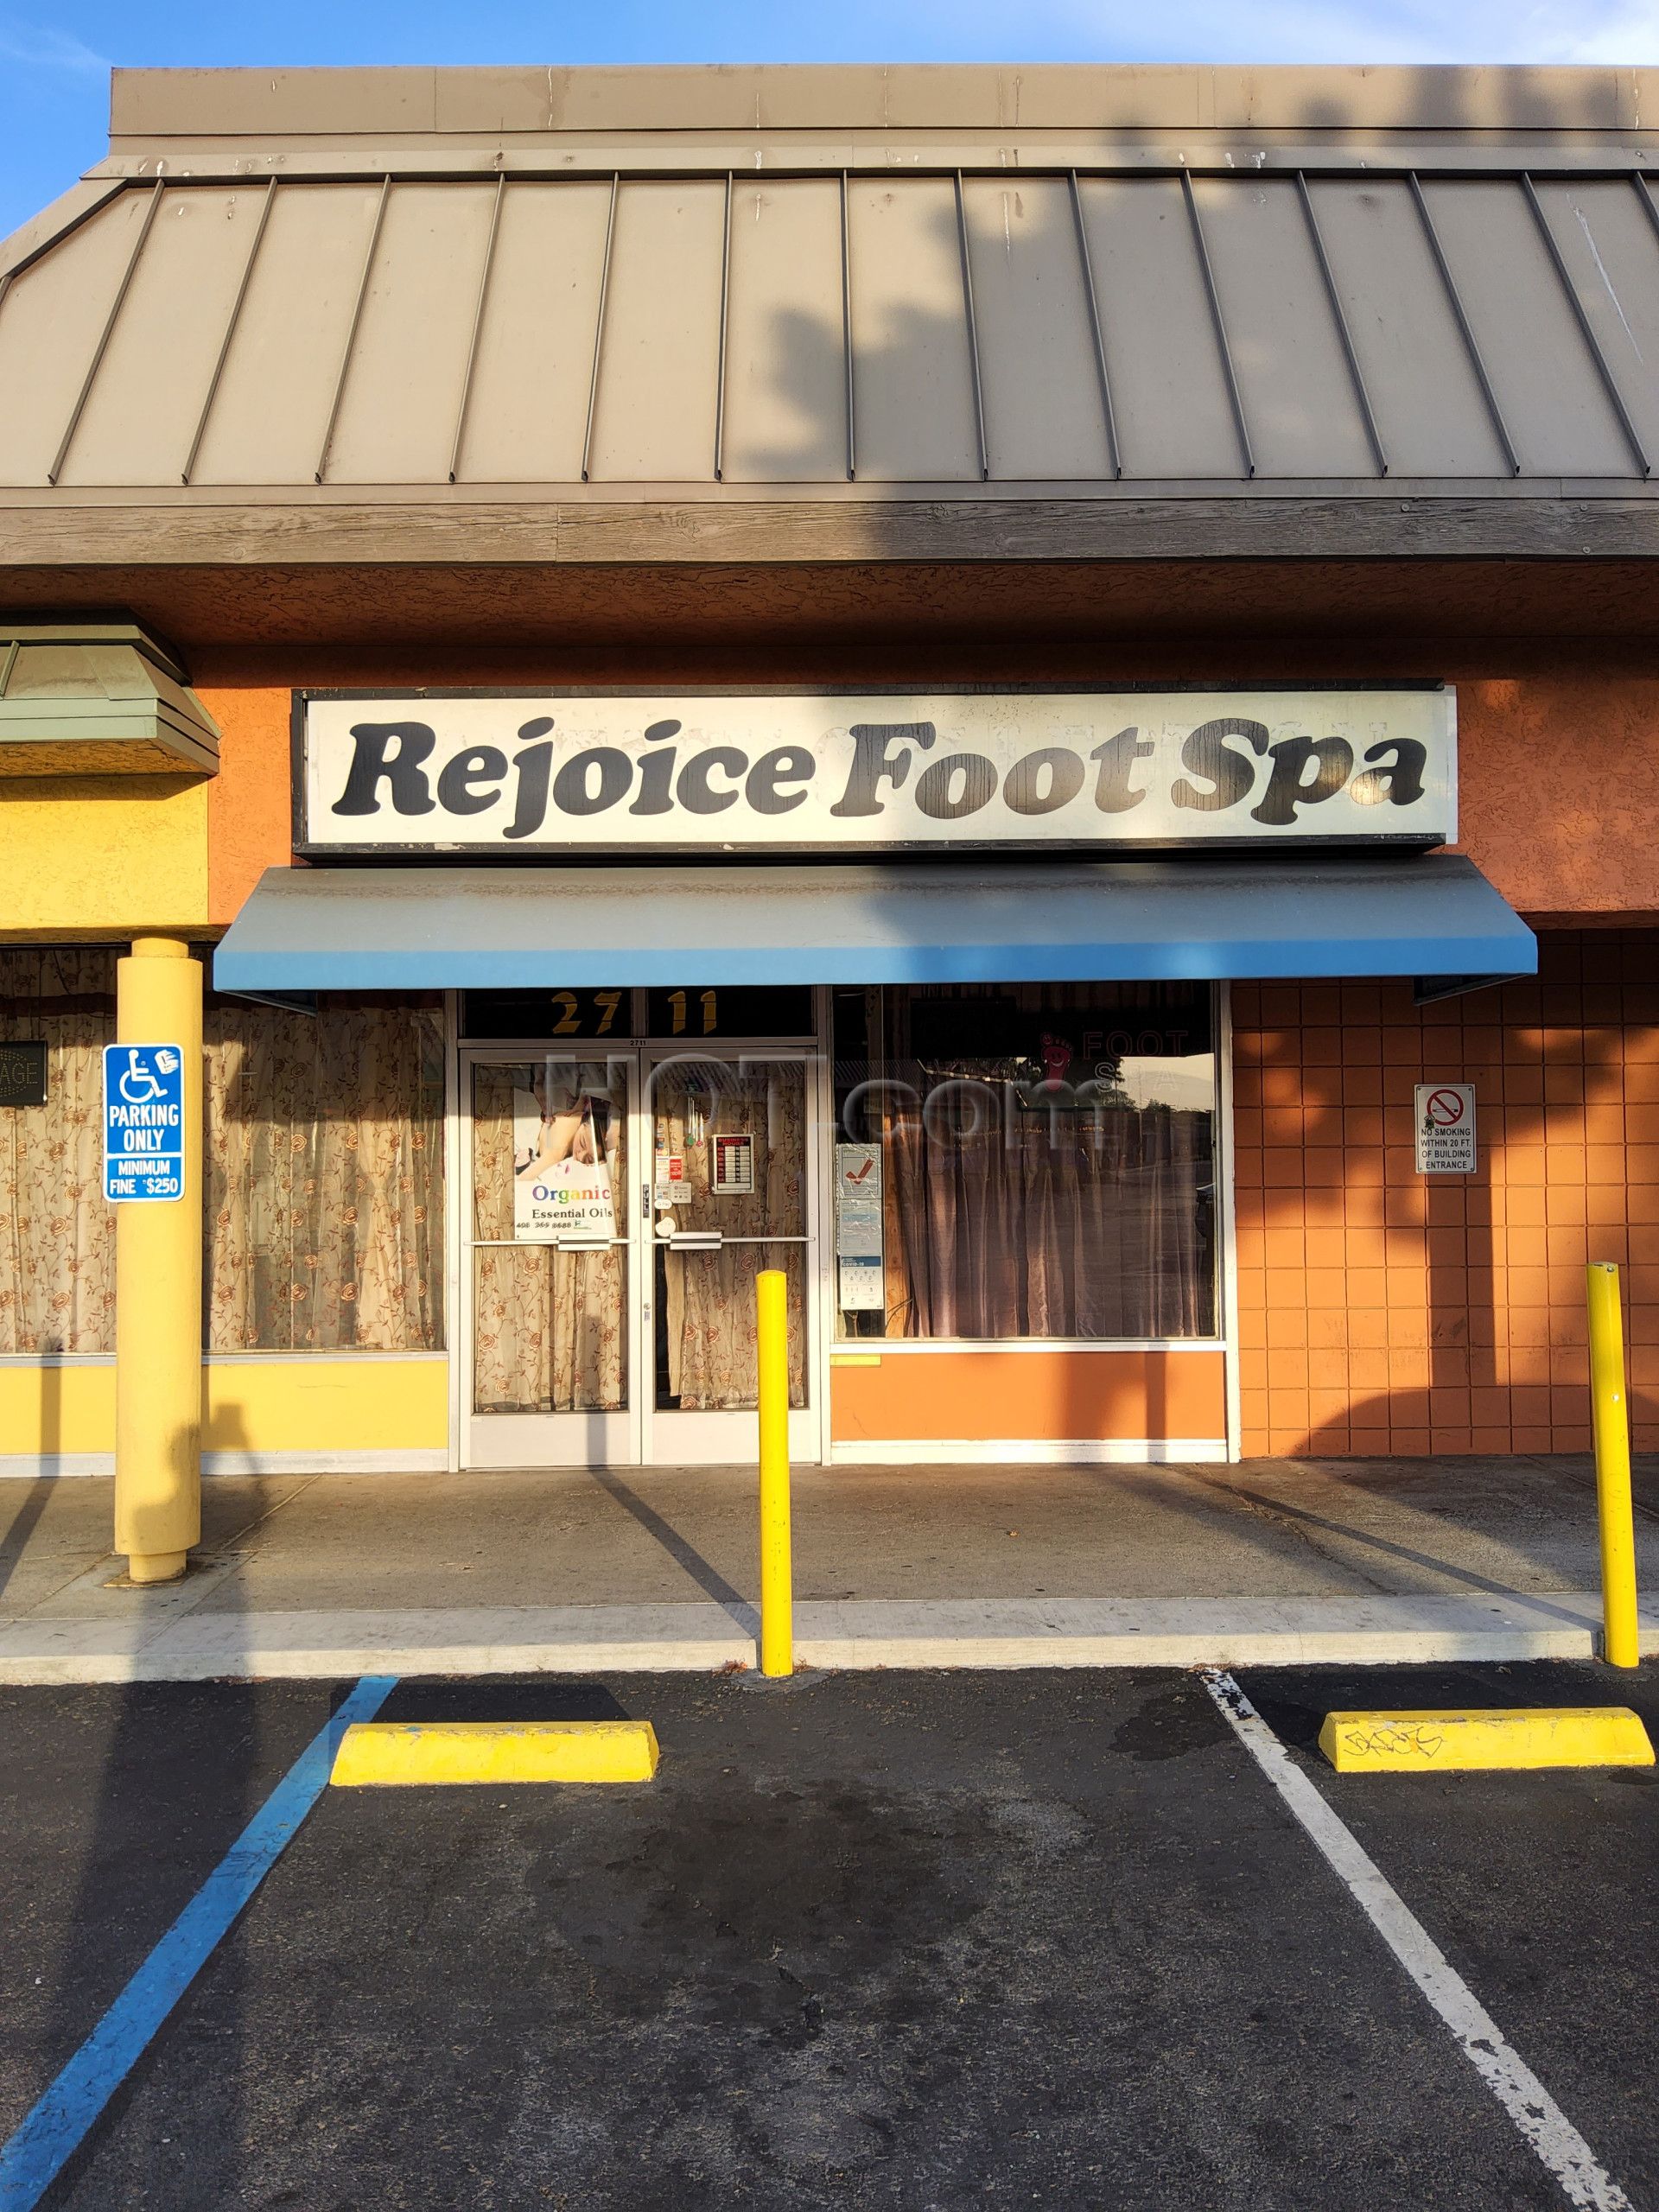 San Jose, California Rejoice Foot Spa